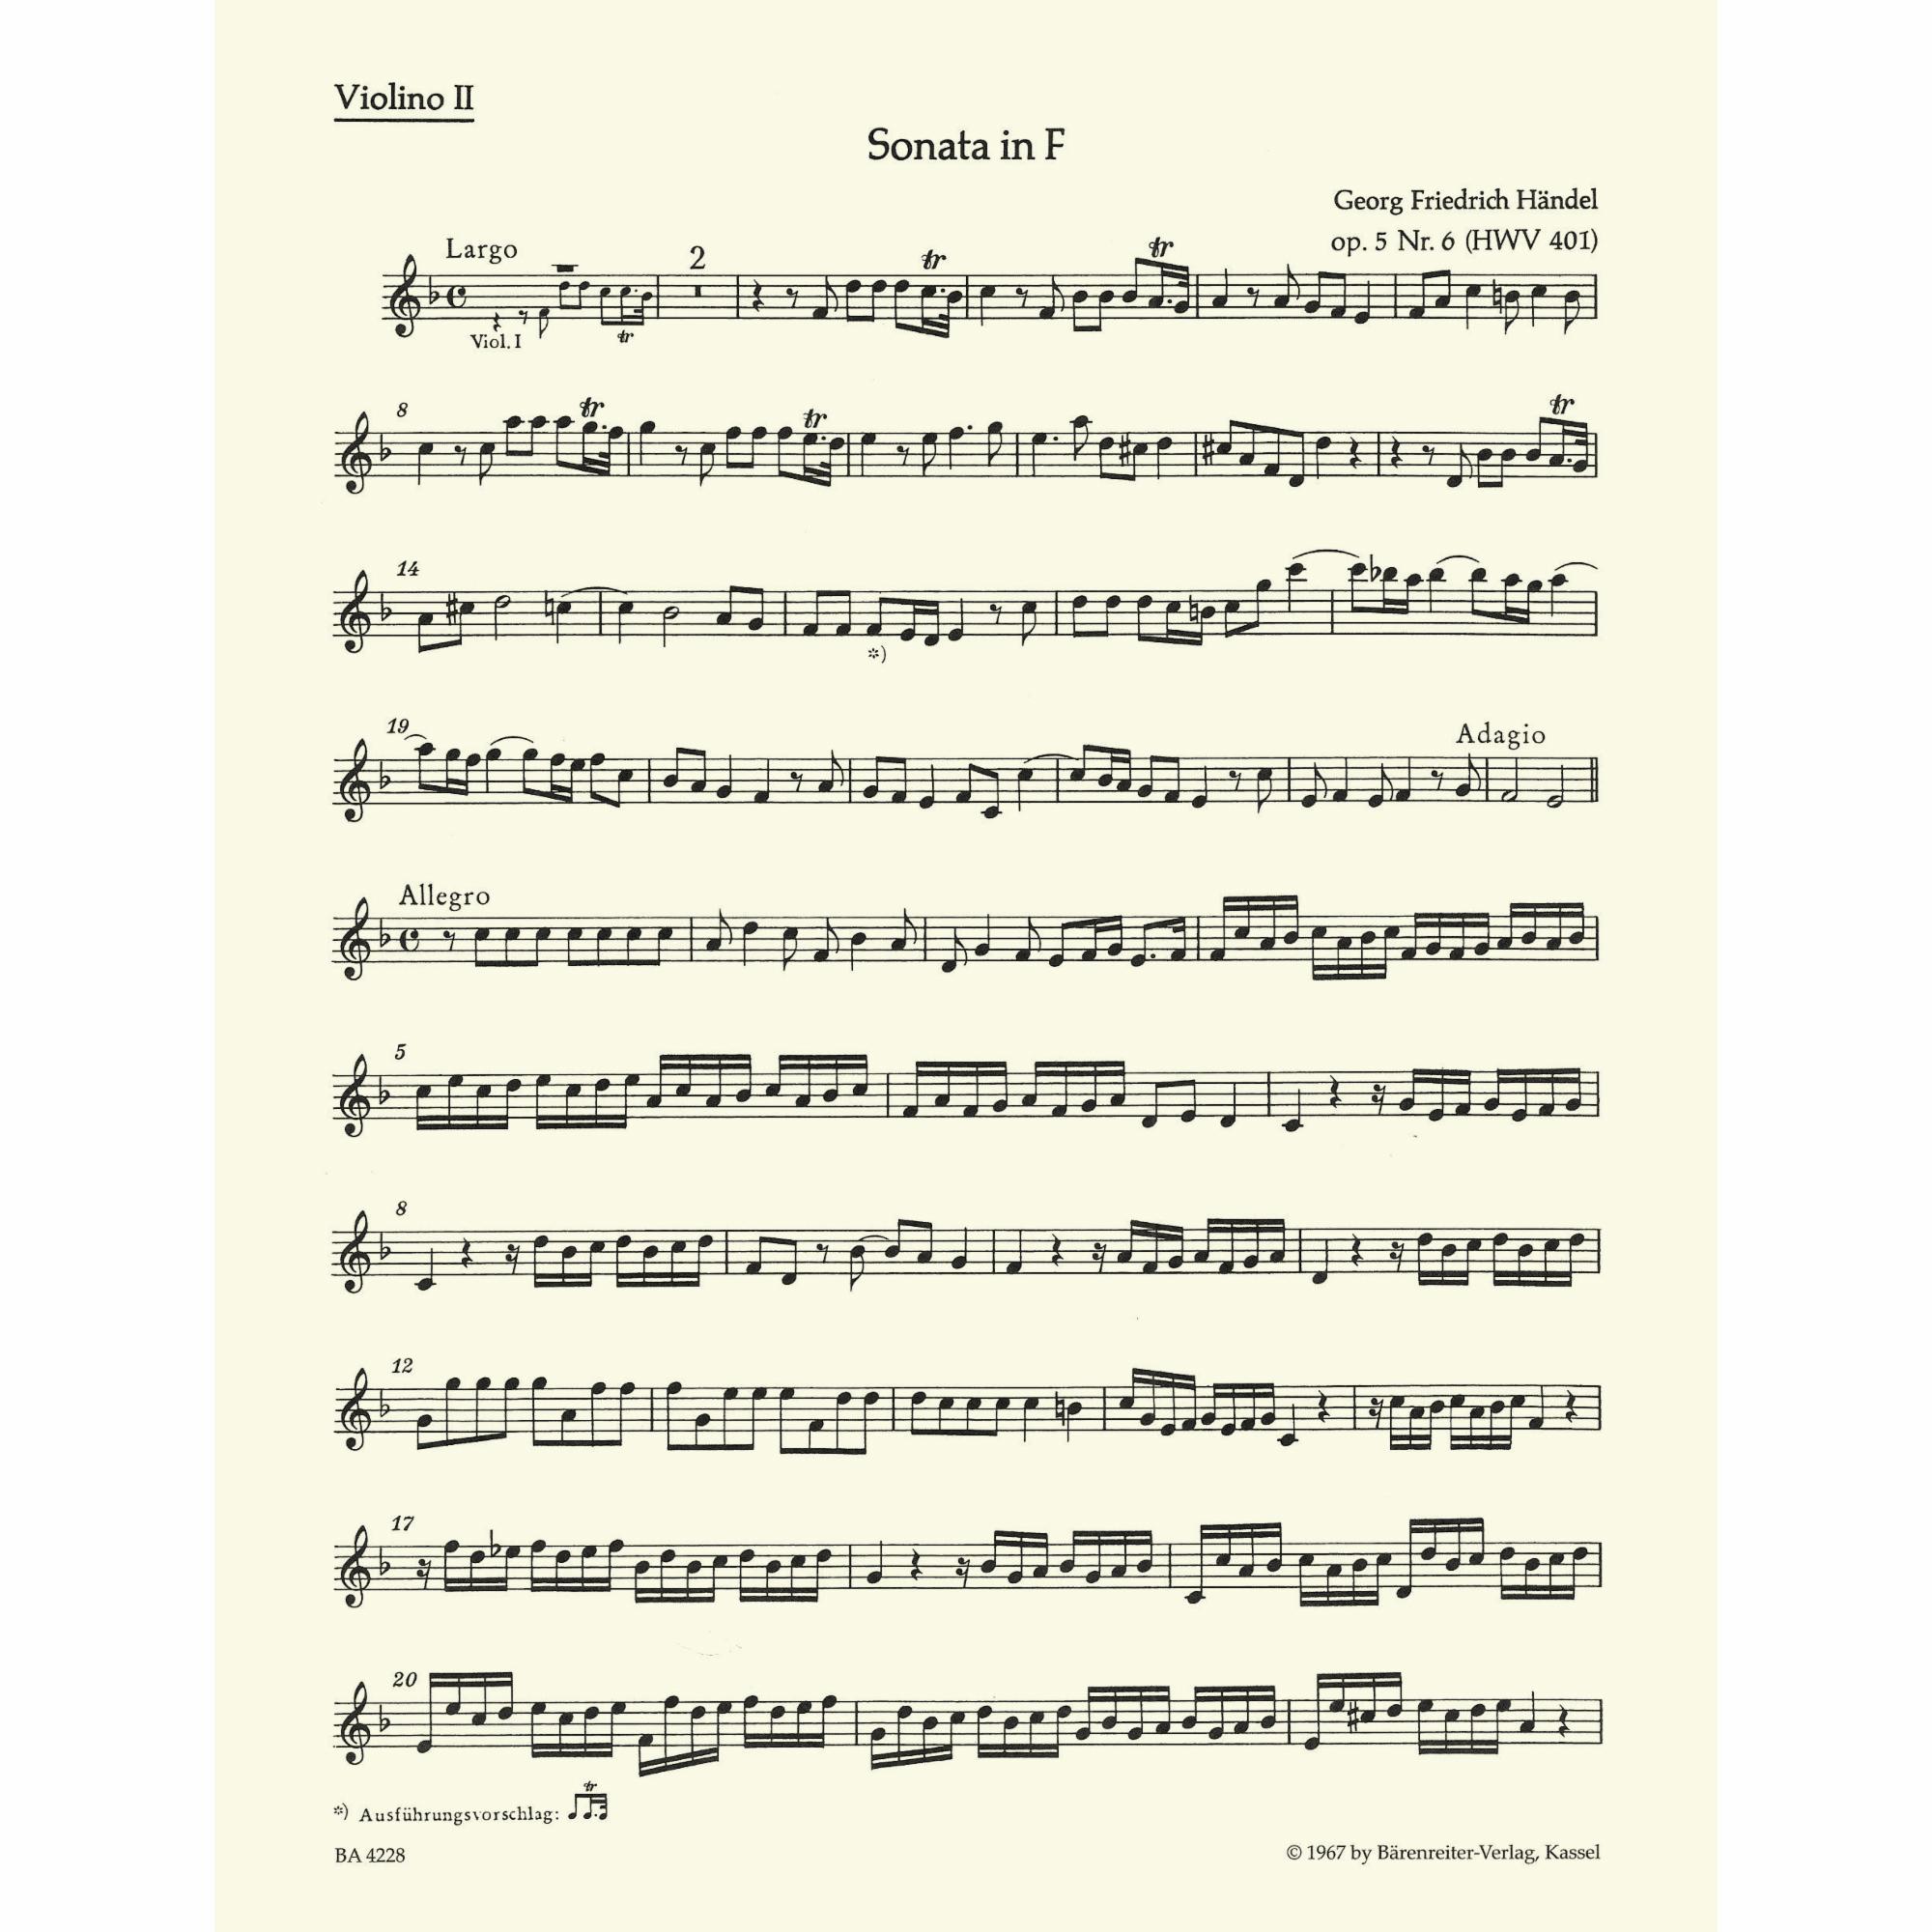 Sample: Violin II